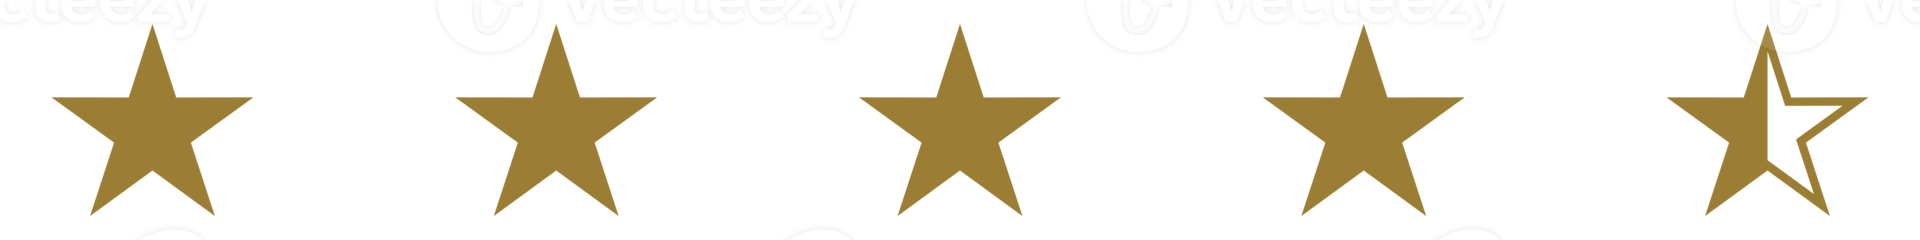 Five Star Sign, 5 Star Rating Icon Symbol for Pictogram, Apps, Website or Graphic Design Element. Format PNG